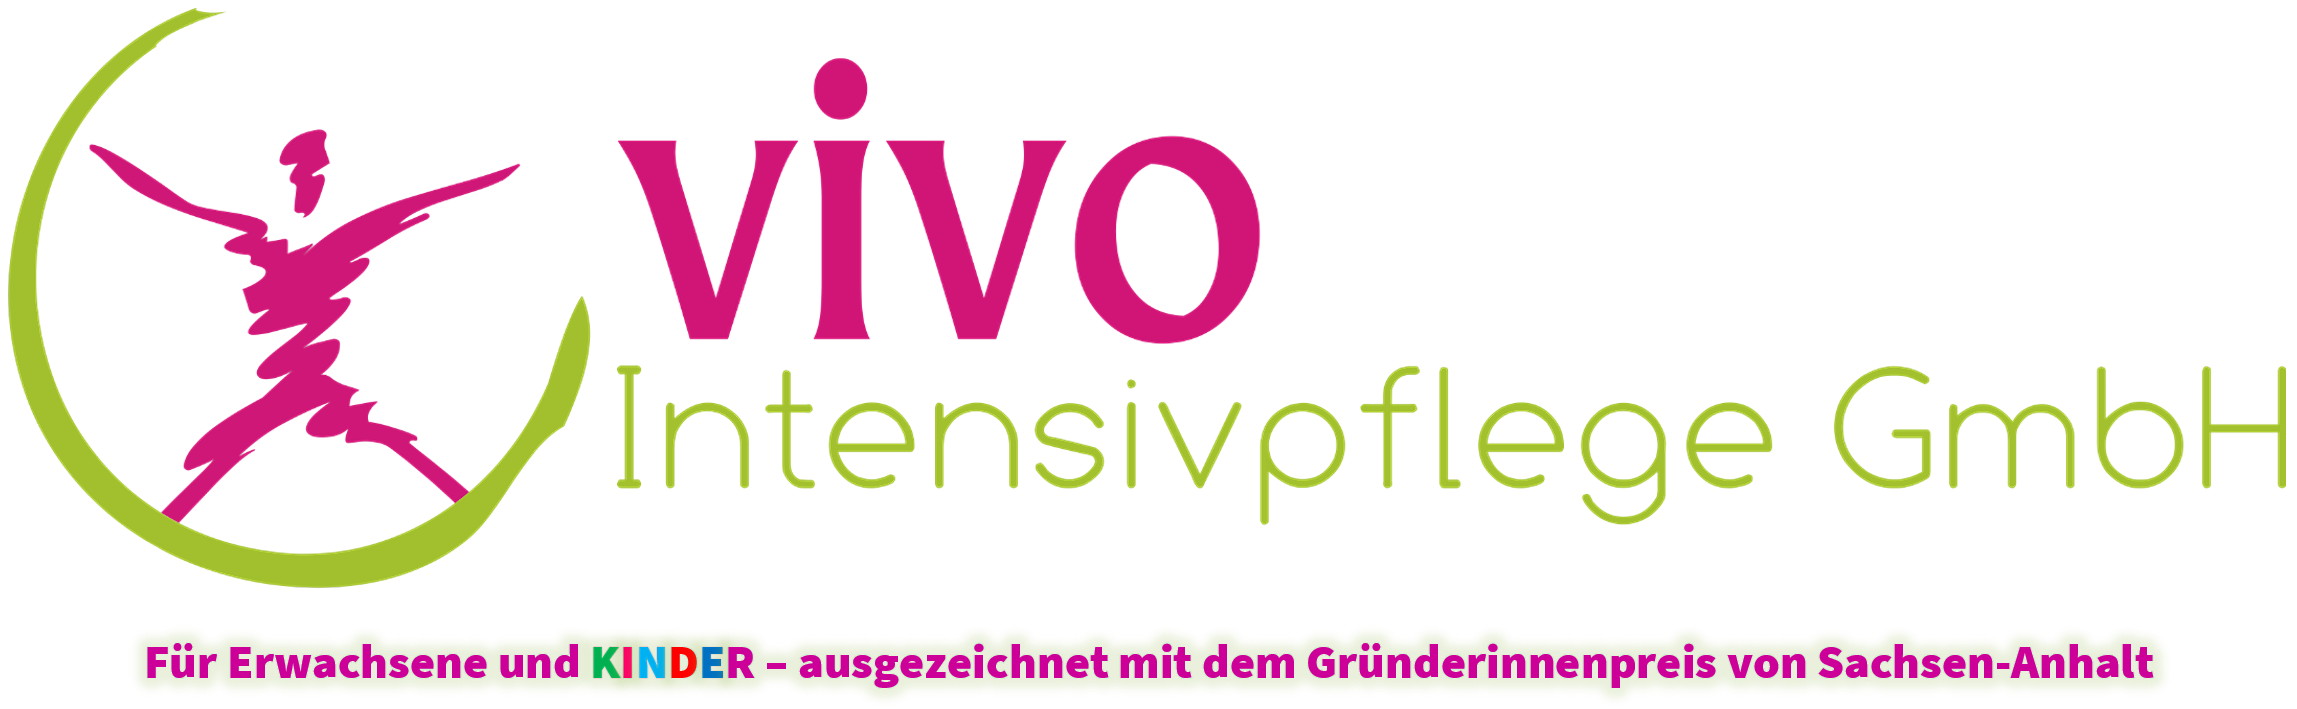 Bilder vivo Intensivpflege GmbH